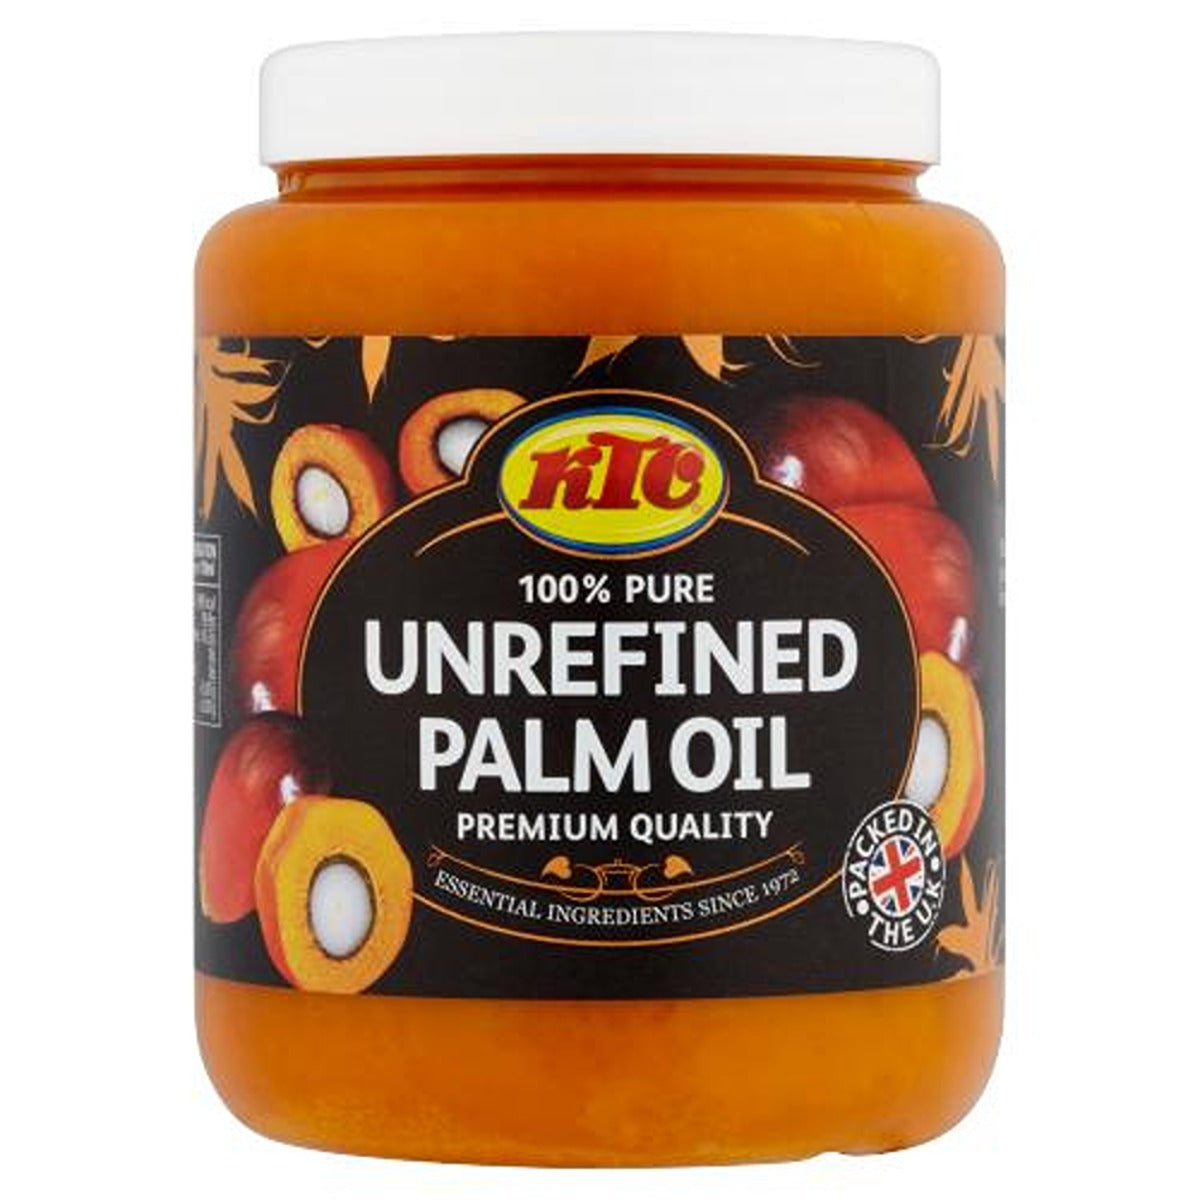 KTC - Unrefined Palm Oil - 500ml - Continental Food Store